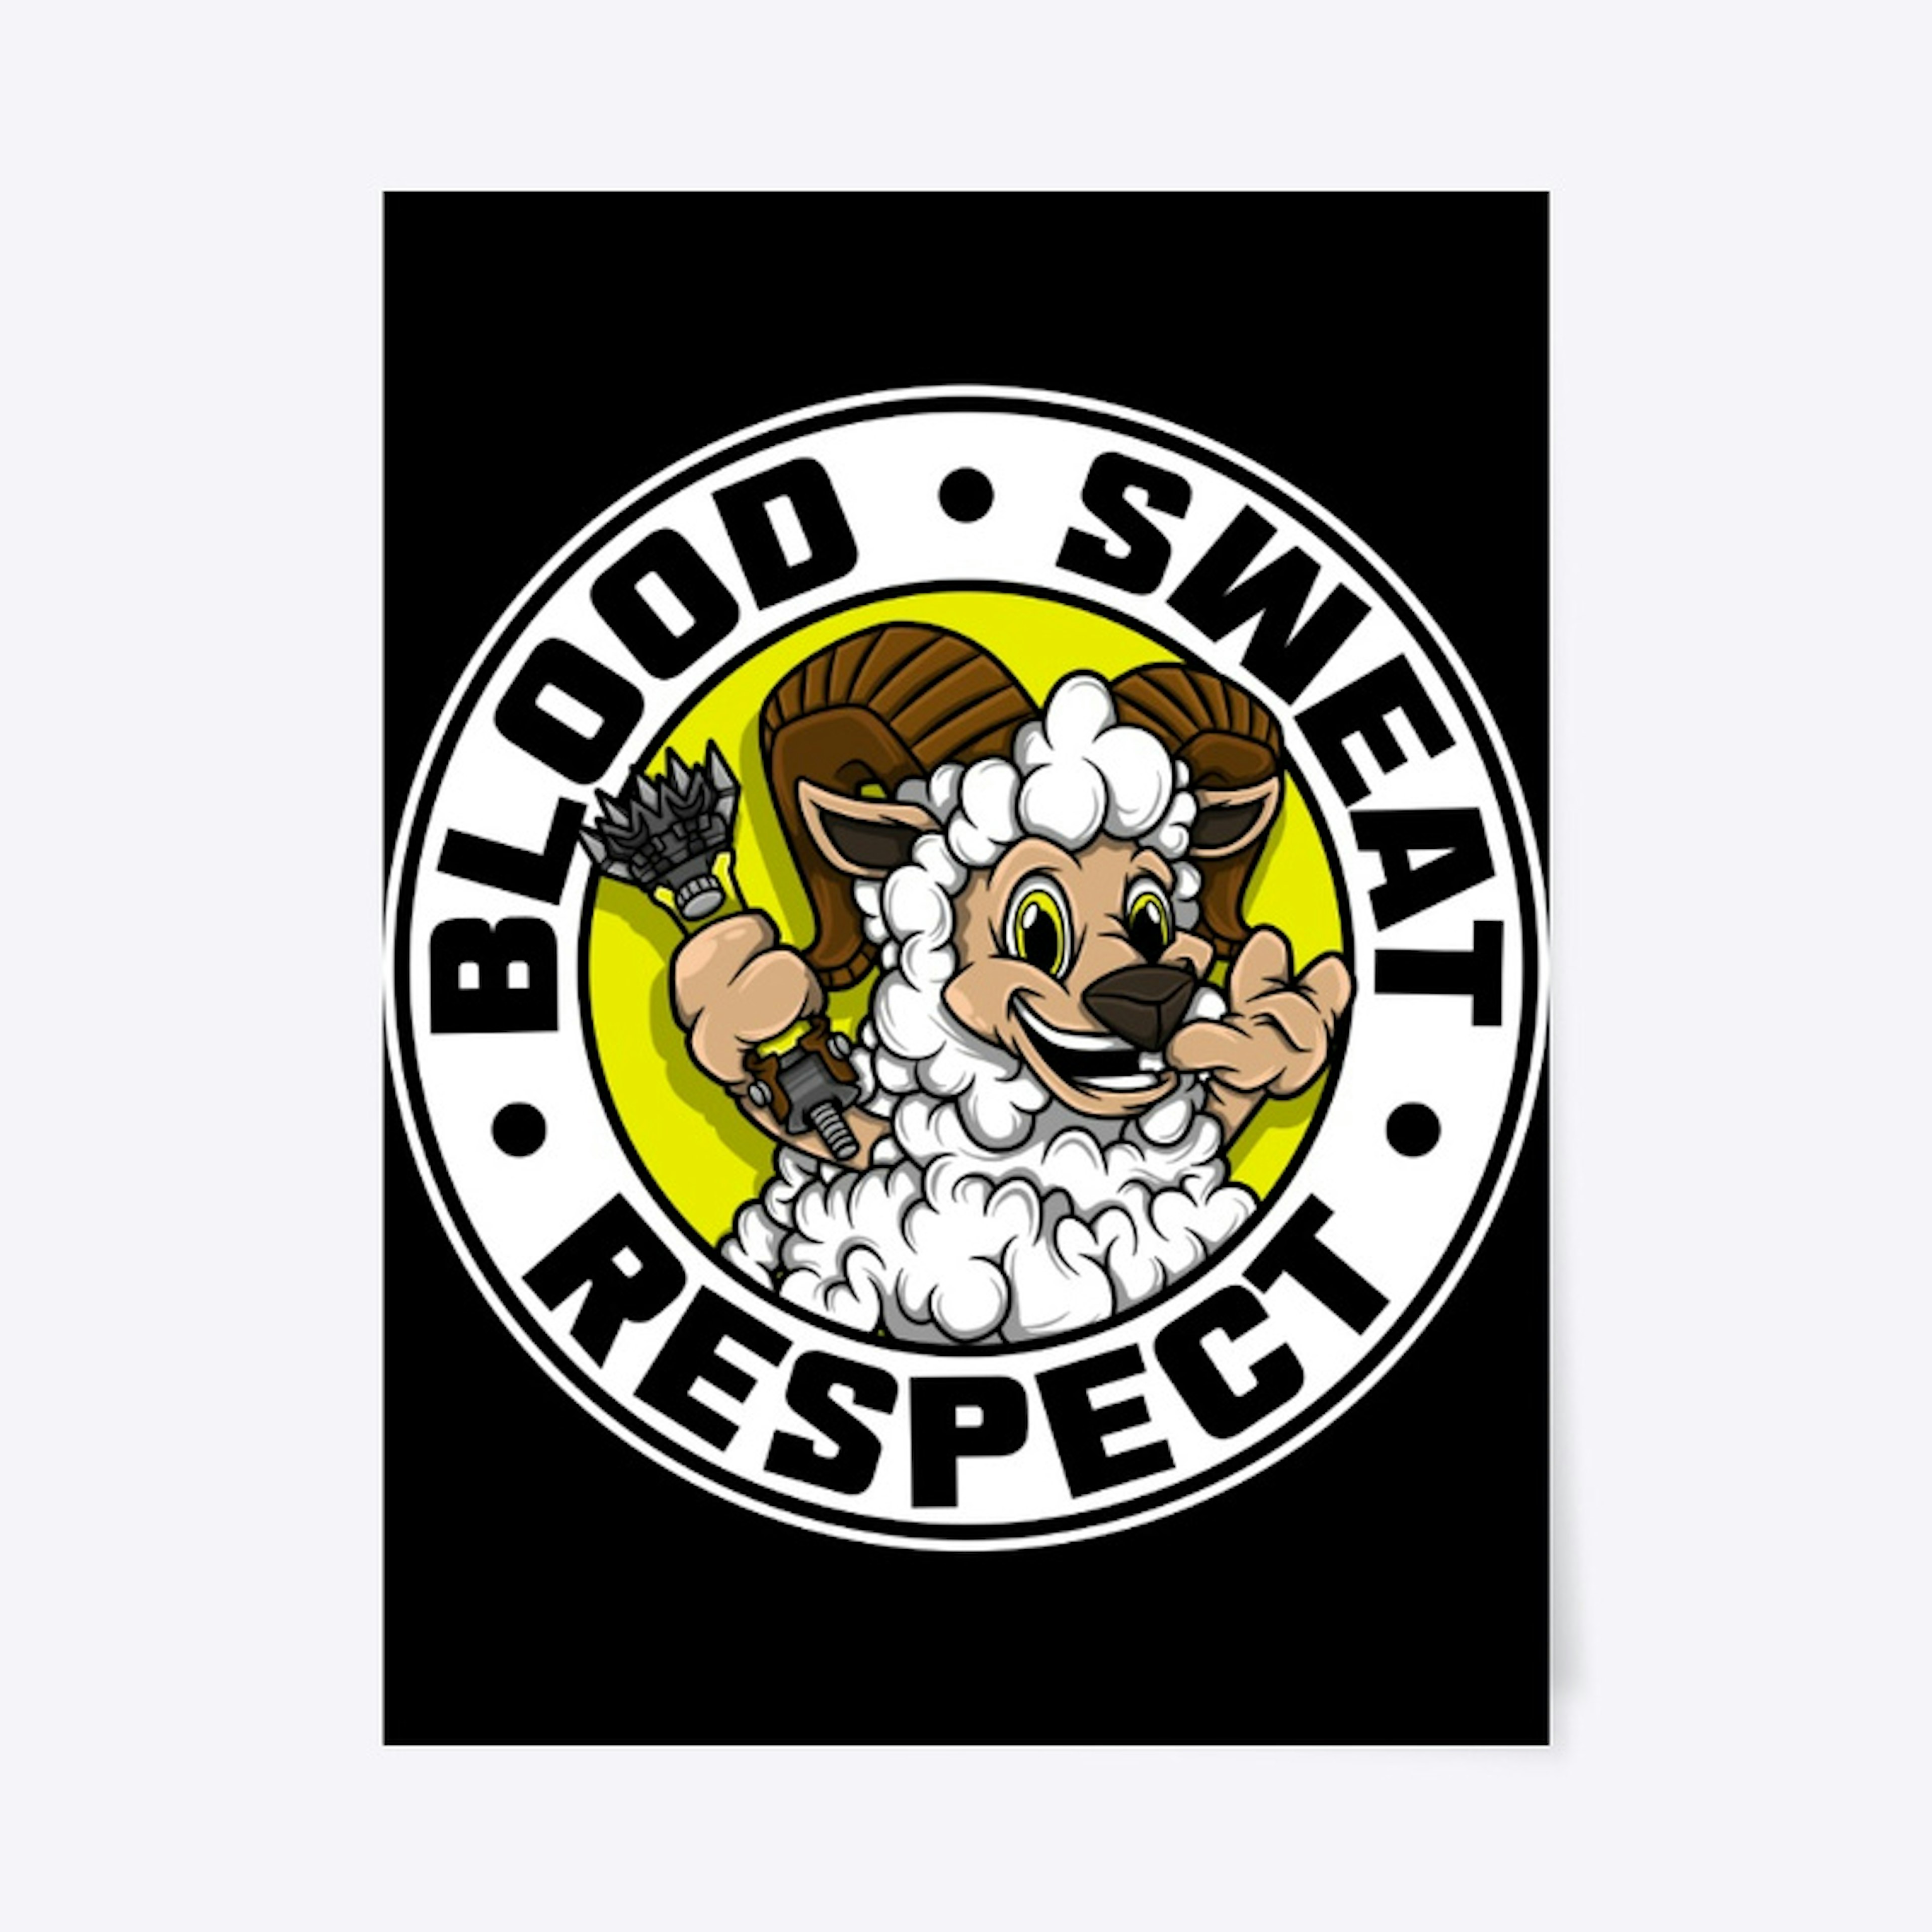 BLOOD-SWEAT-RESPECT - Shearing Apparel